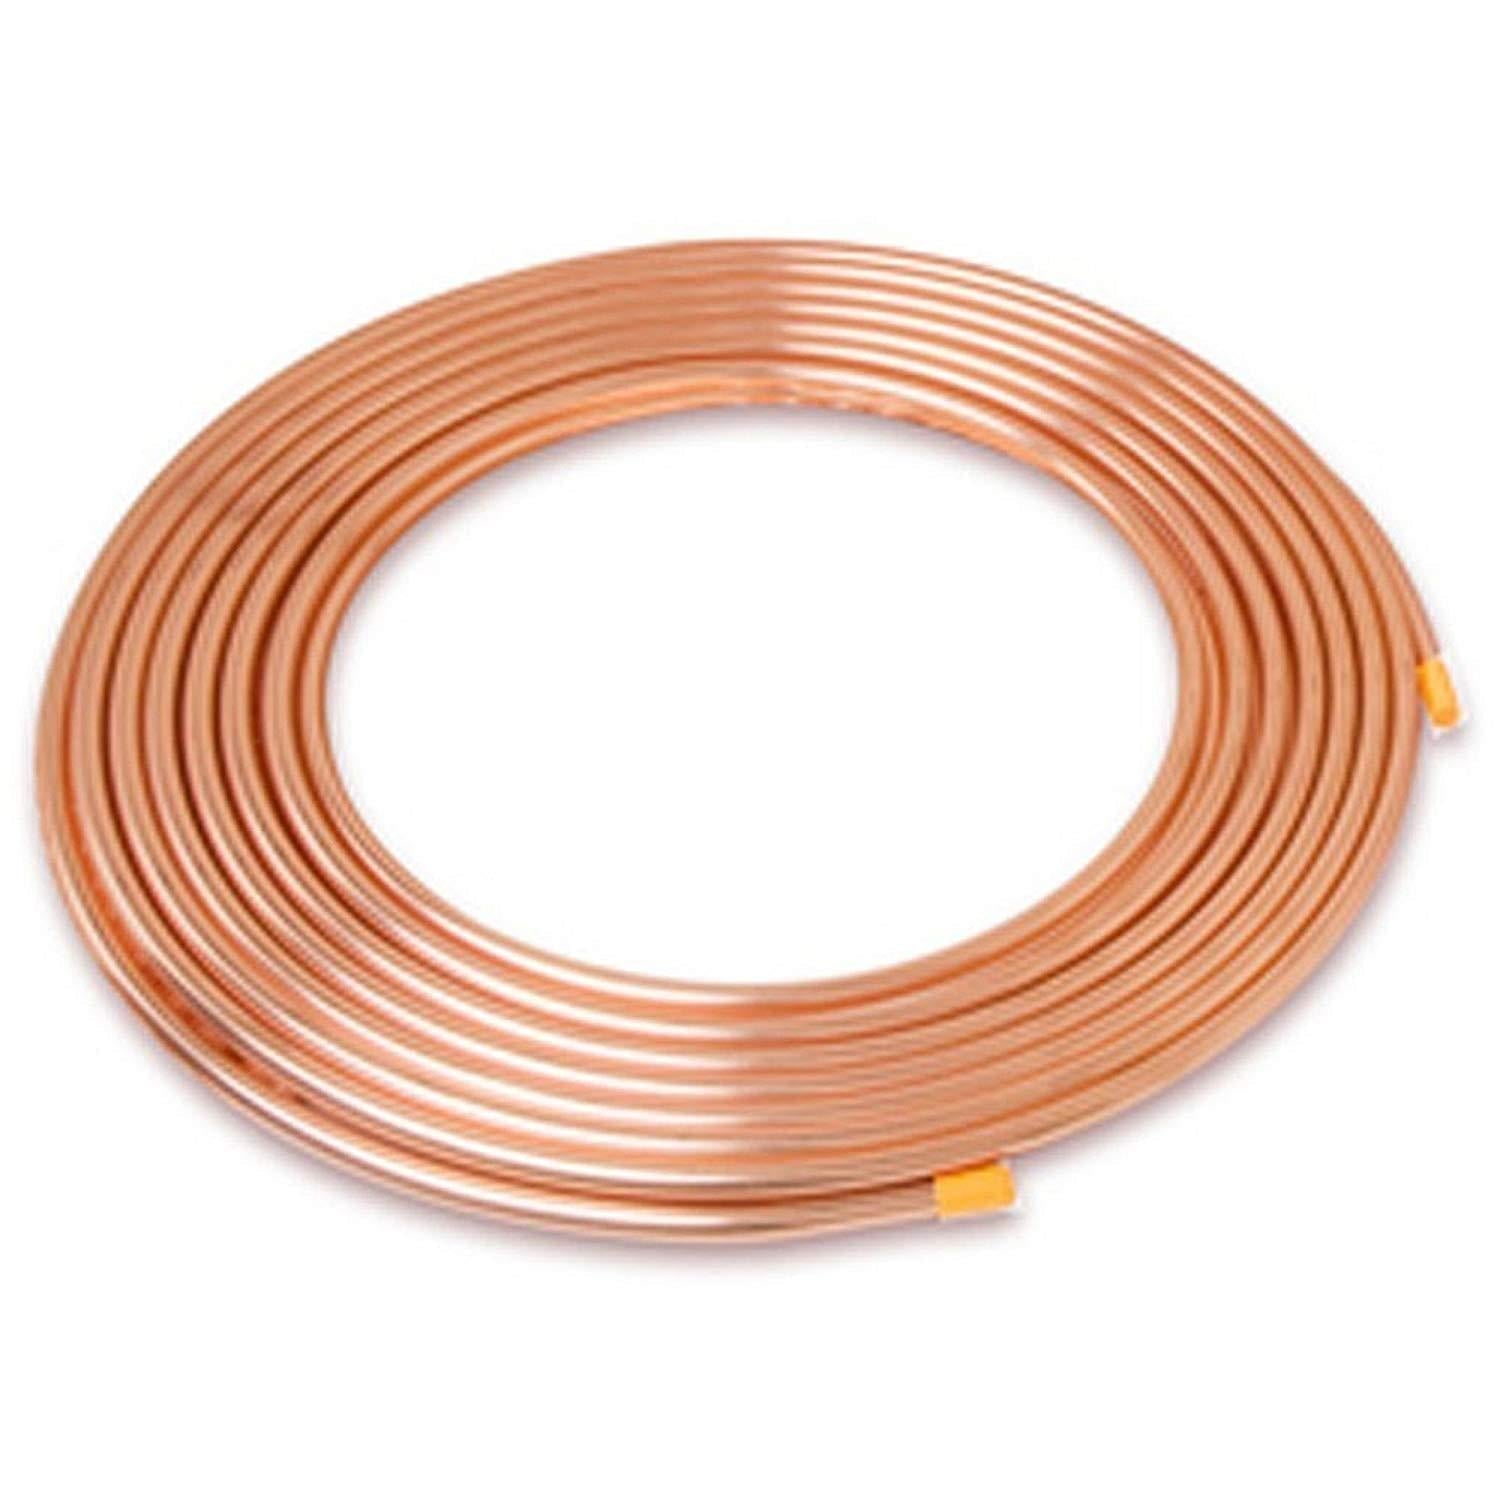 Copper Tube Pipe Soft Type 𝑝/𝑚eter »-Refrigeration-Unitherm-⌀1/4" 6.35 x 𝑇0.61𝑚𝑚-diyshop.co.za